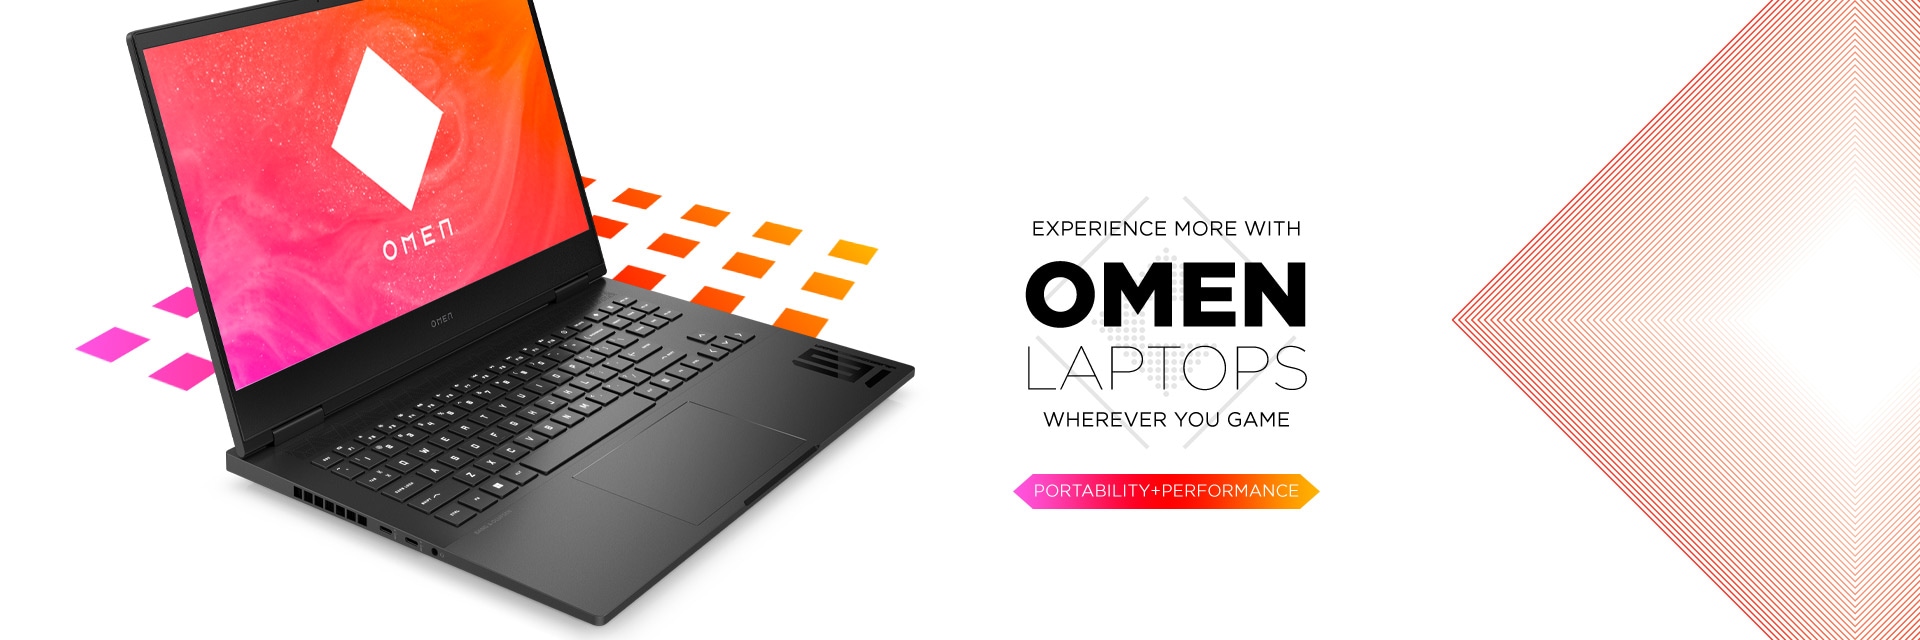 omen desktop, high-powered gaming goodness